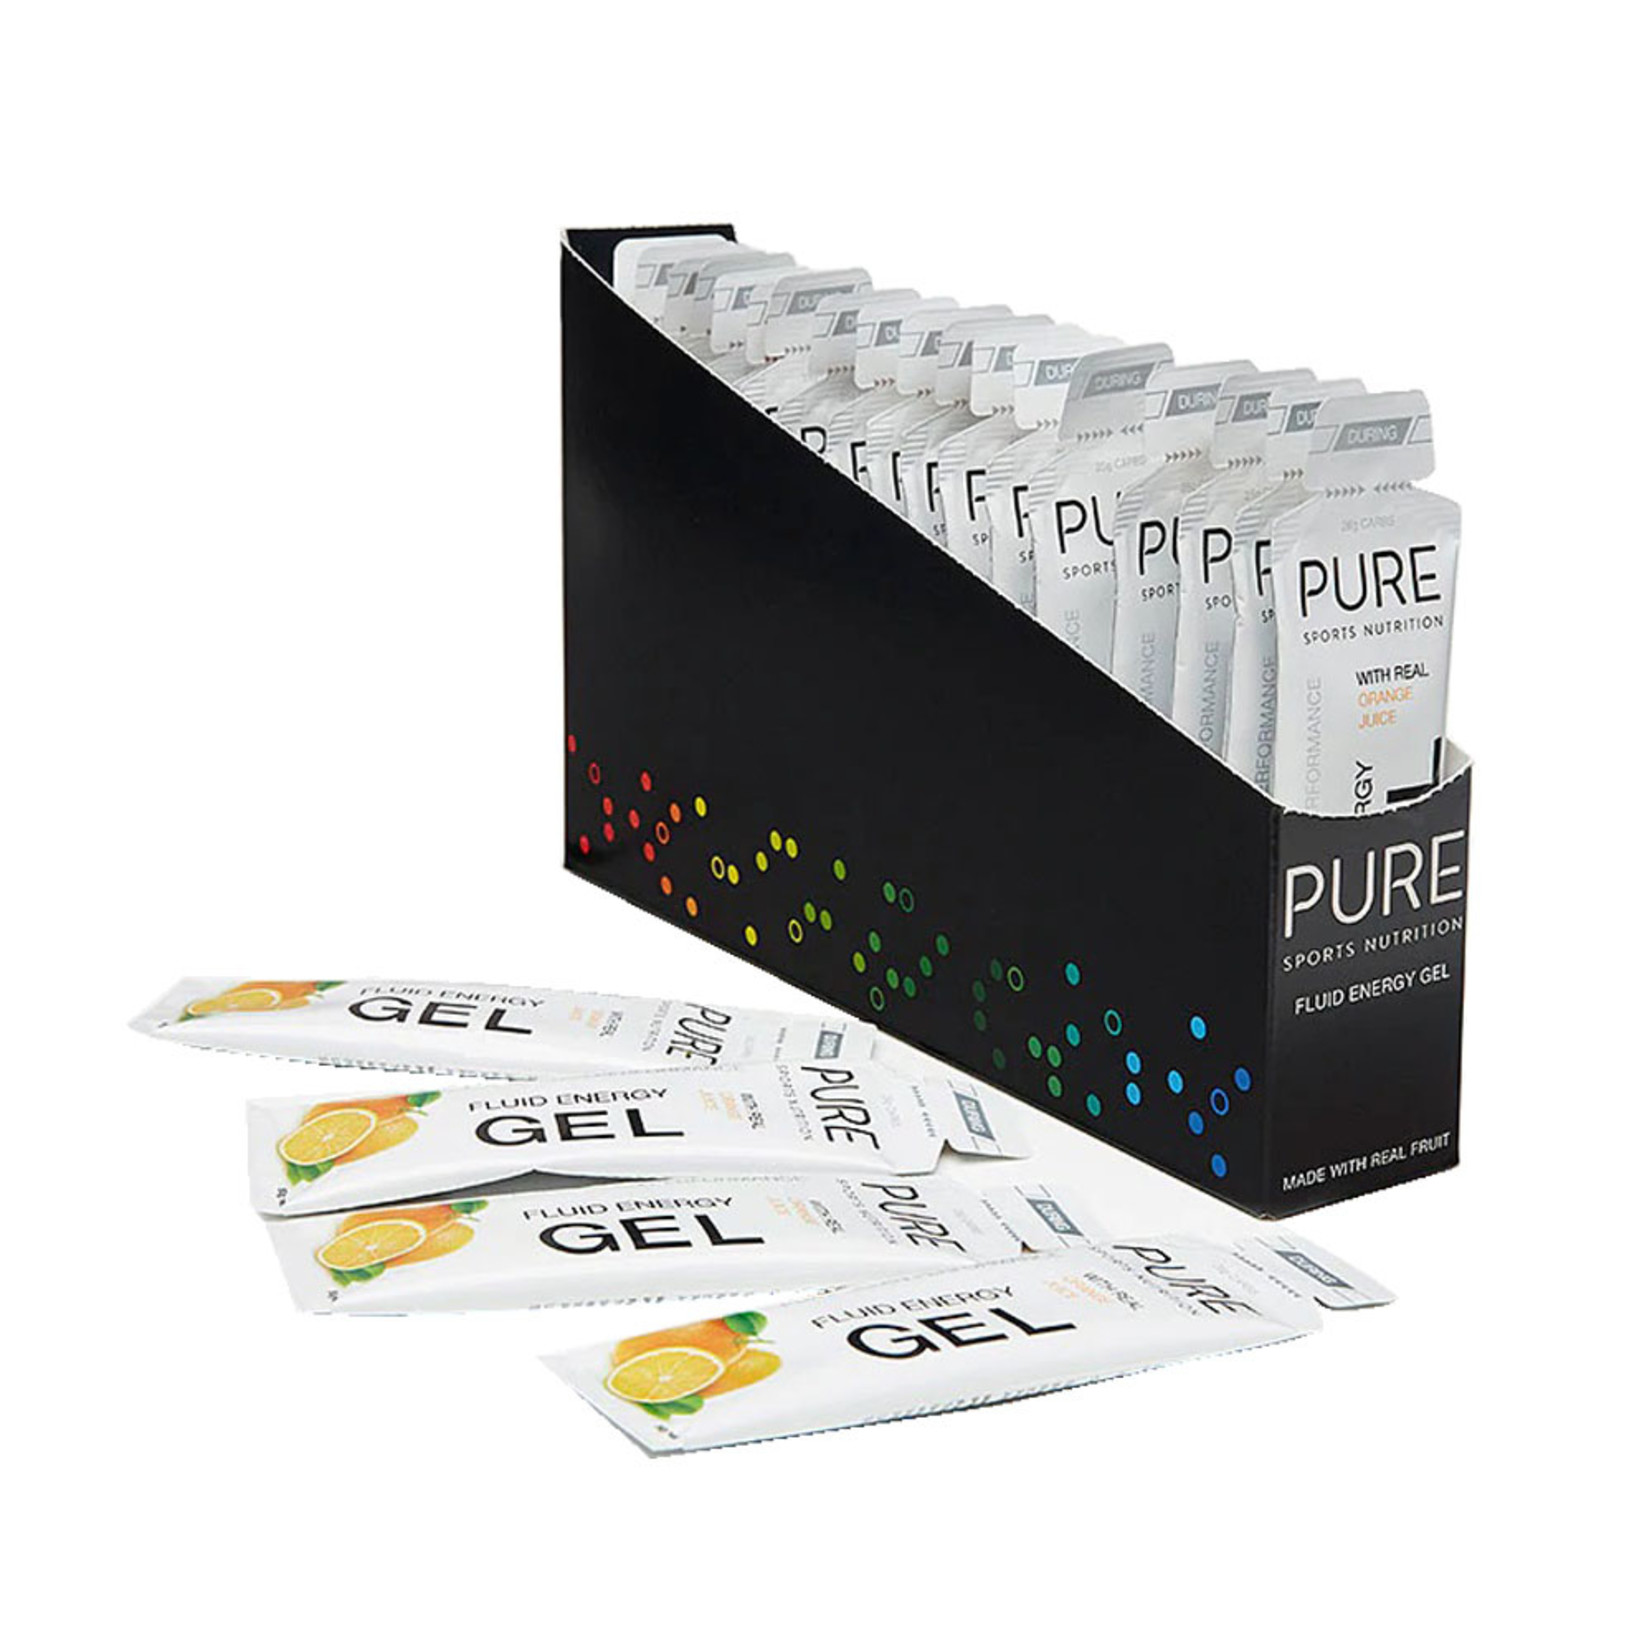 PURE SPORTS NUTRITION PURE Fluid Energy Gel 50g (18 Gels)